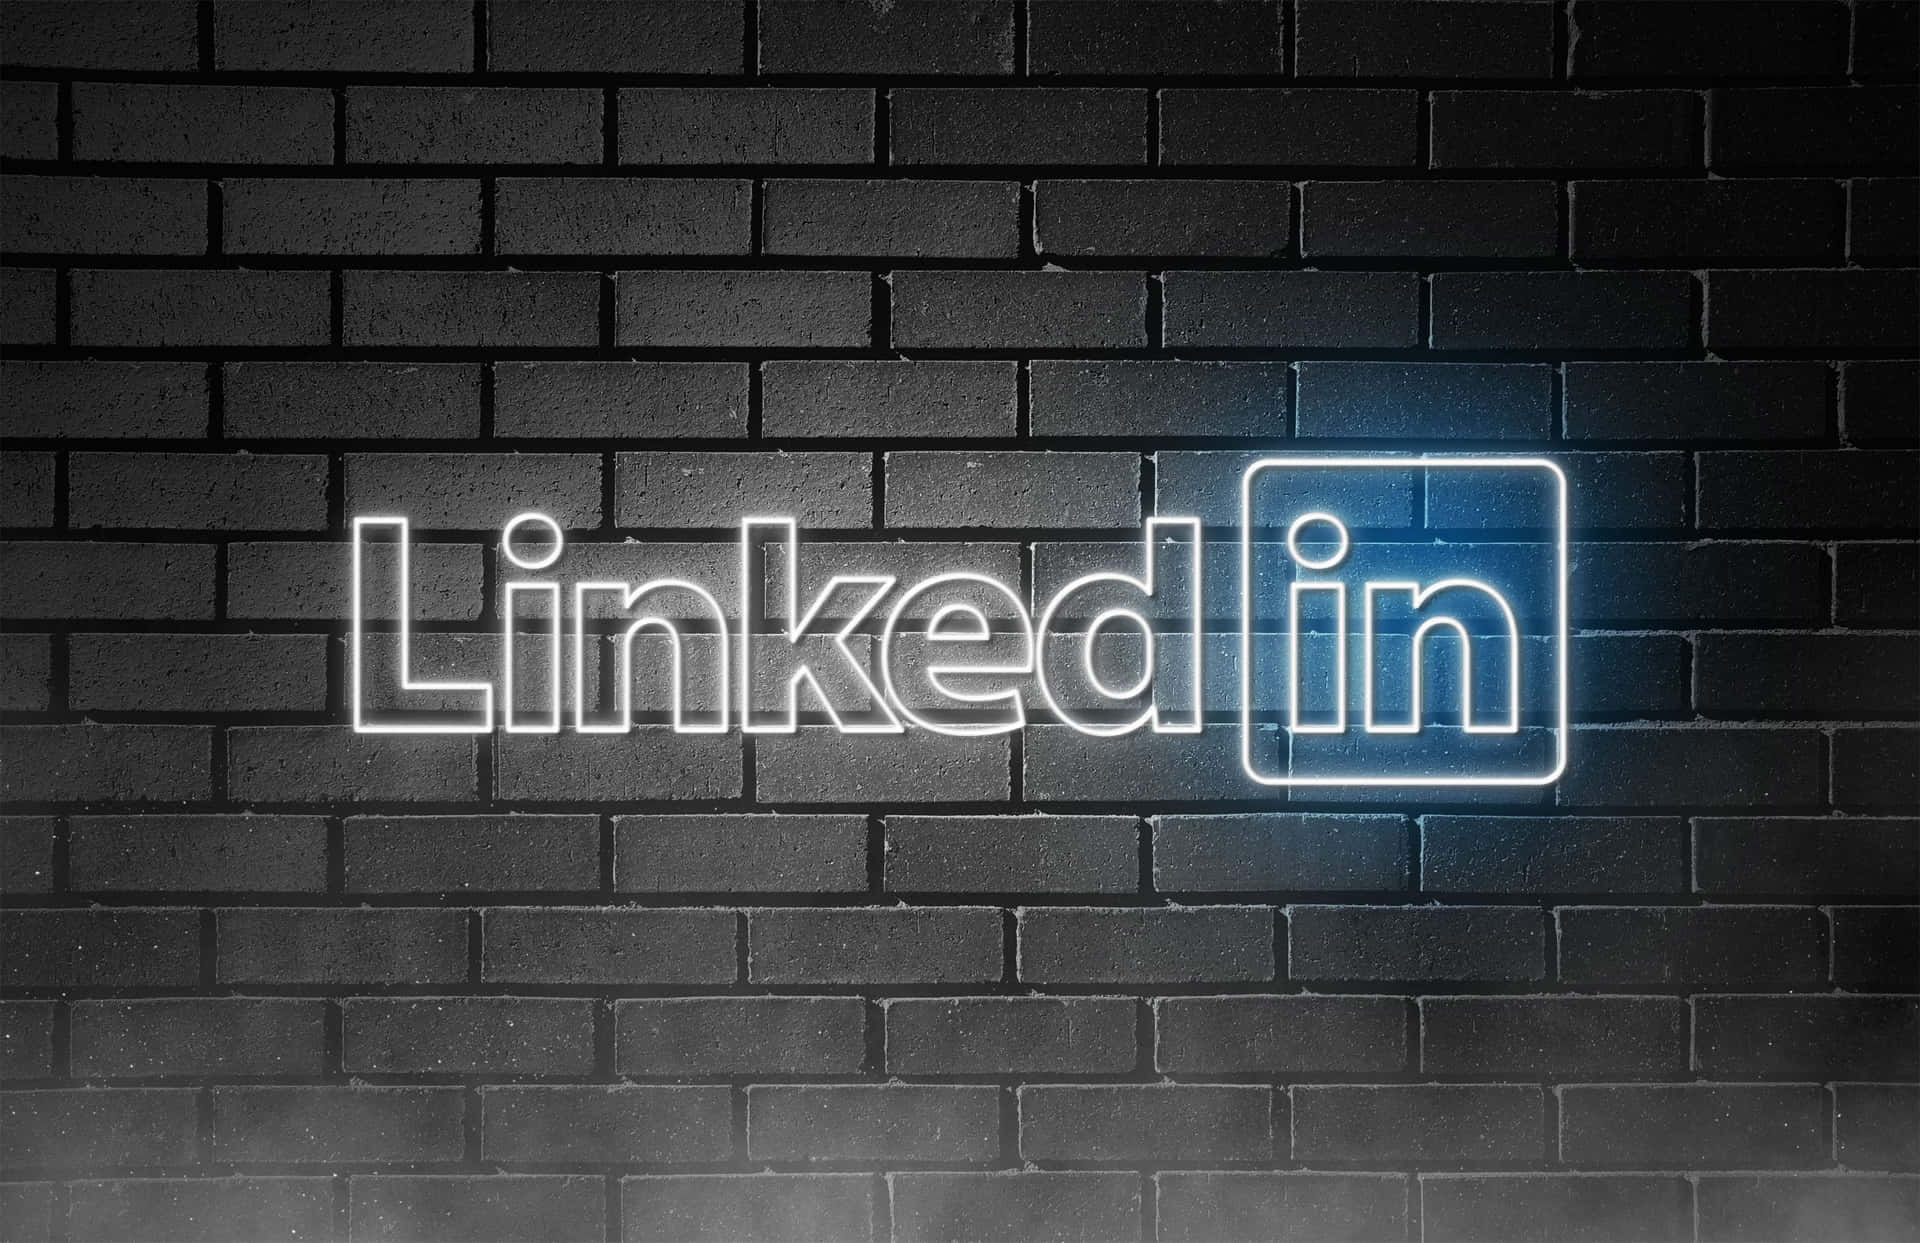 Logotipode Linkedin En Una Pared De Ladrillos